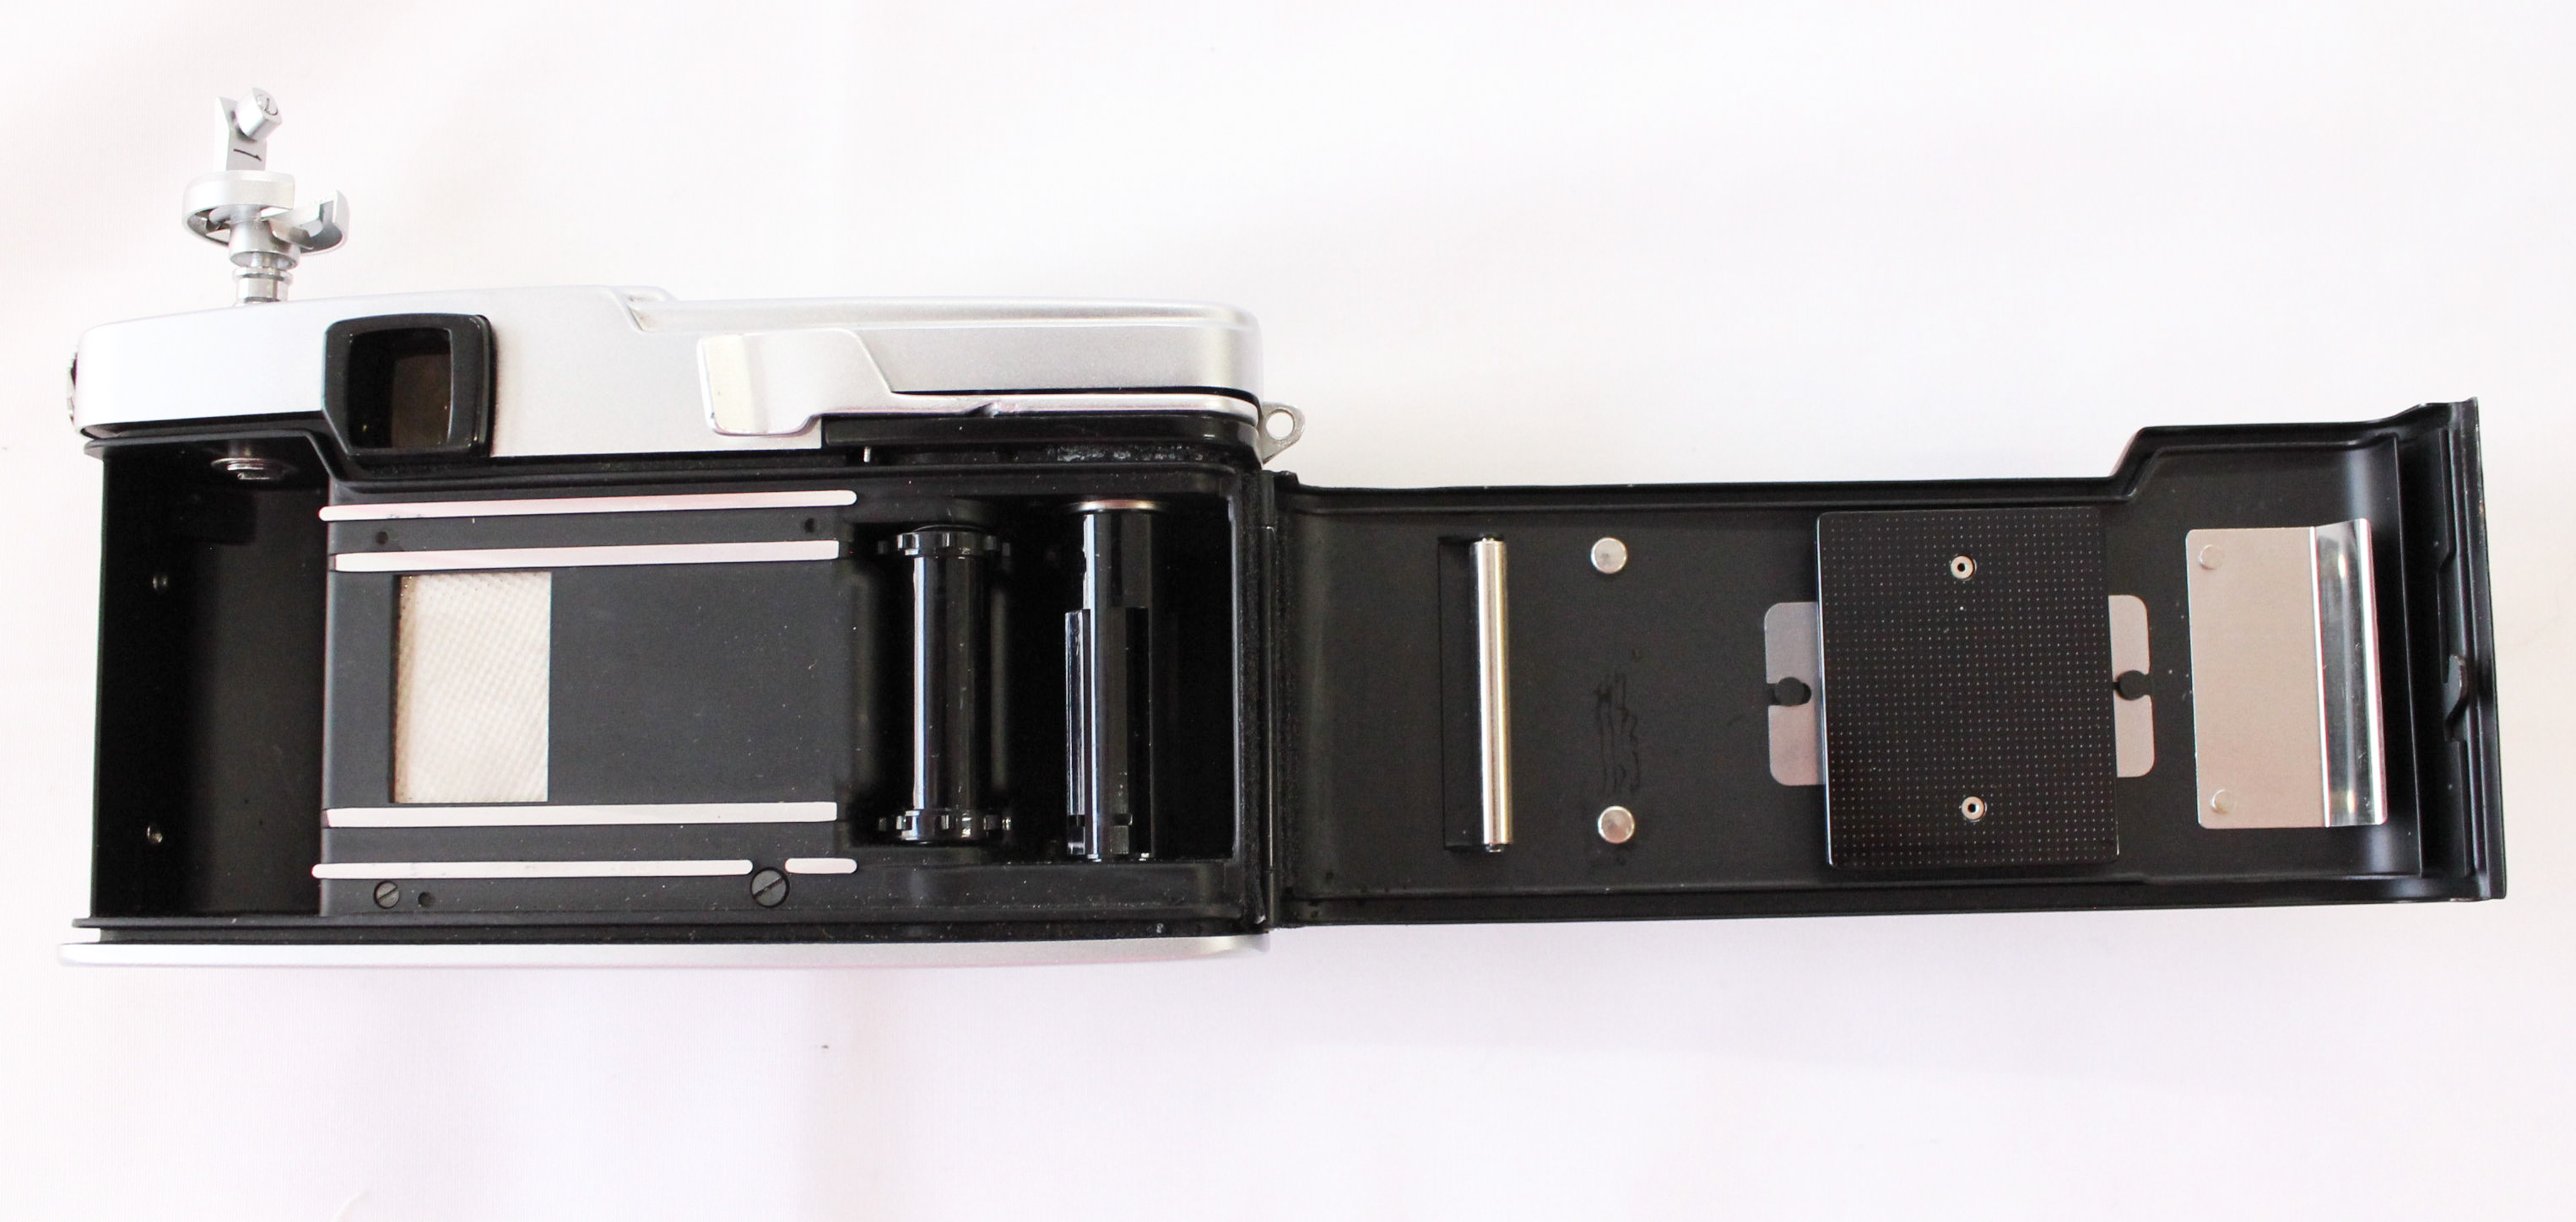 Olympus Pen FT Half Frame Film Camera Body with F.Zuiko Auto-S 